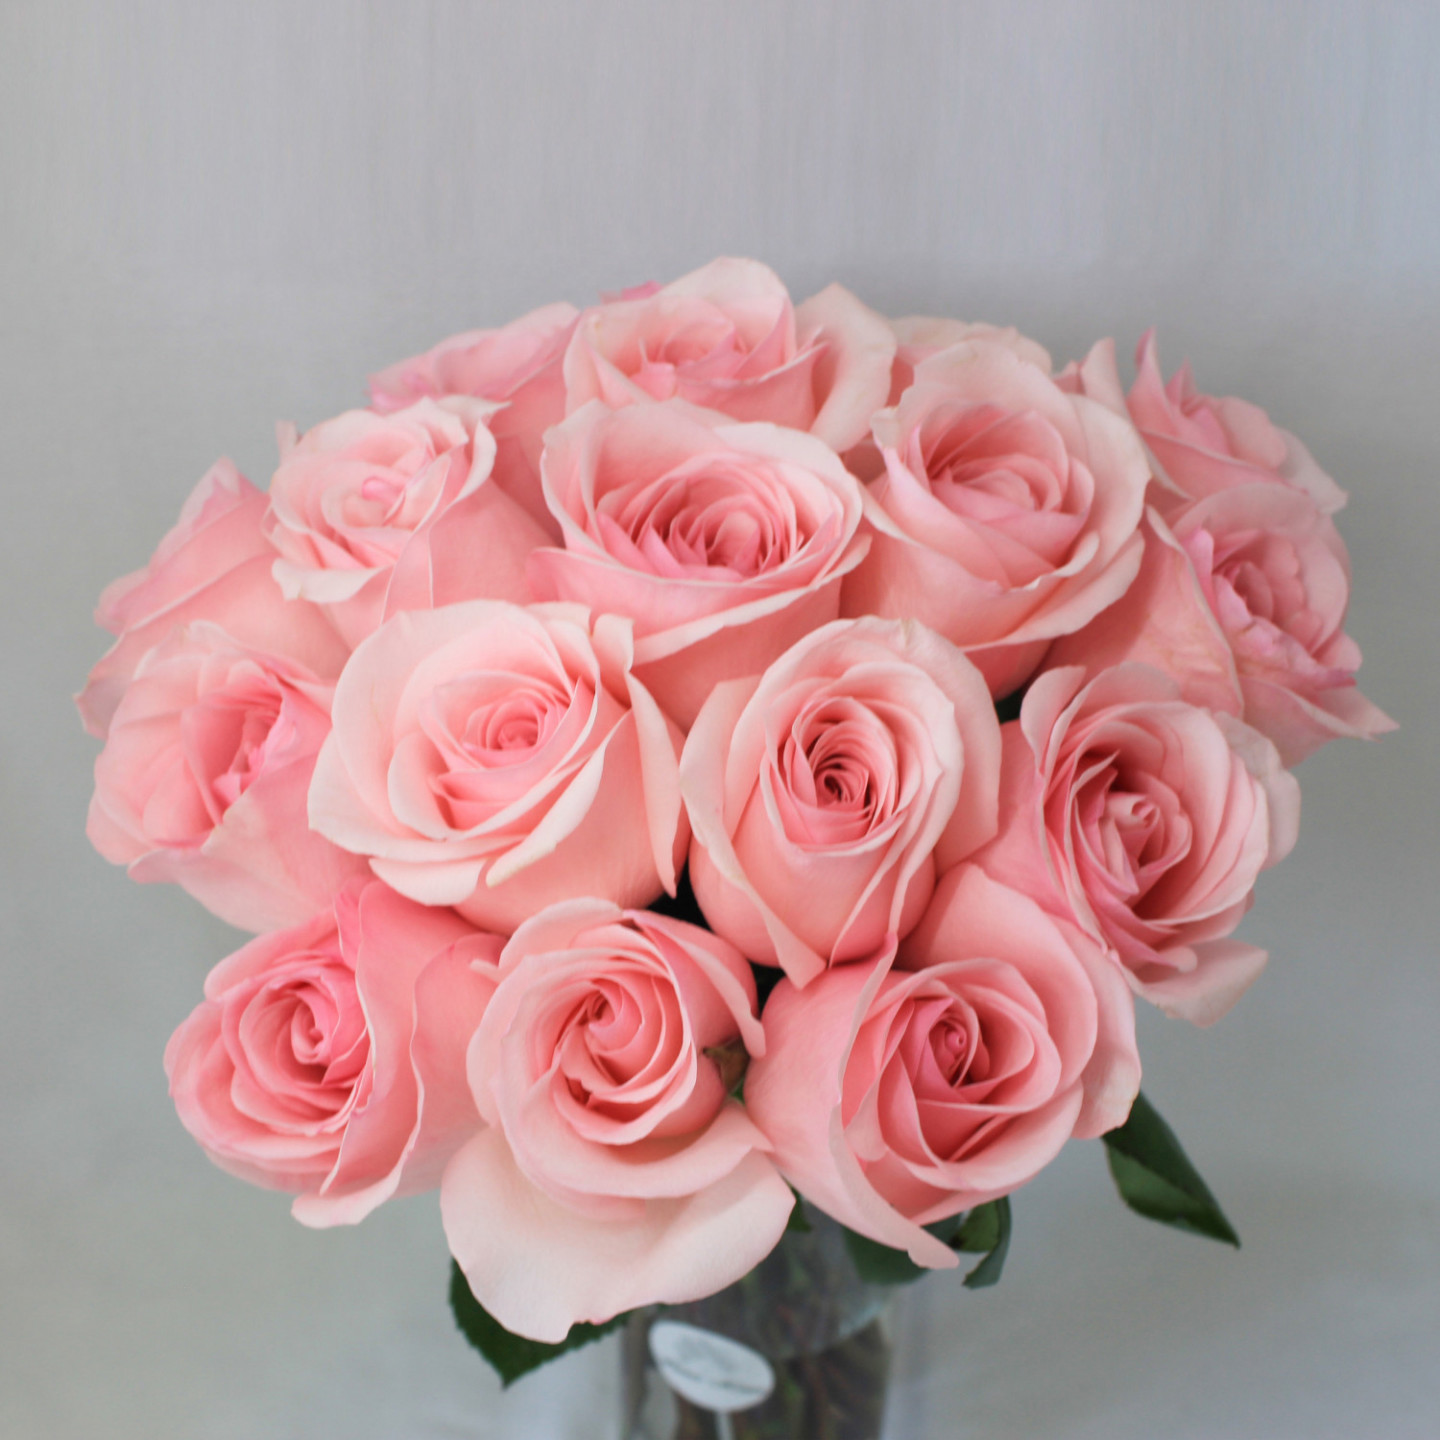 18 Novia Light Pink Roses Bouquet